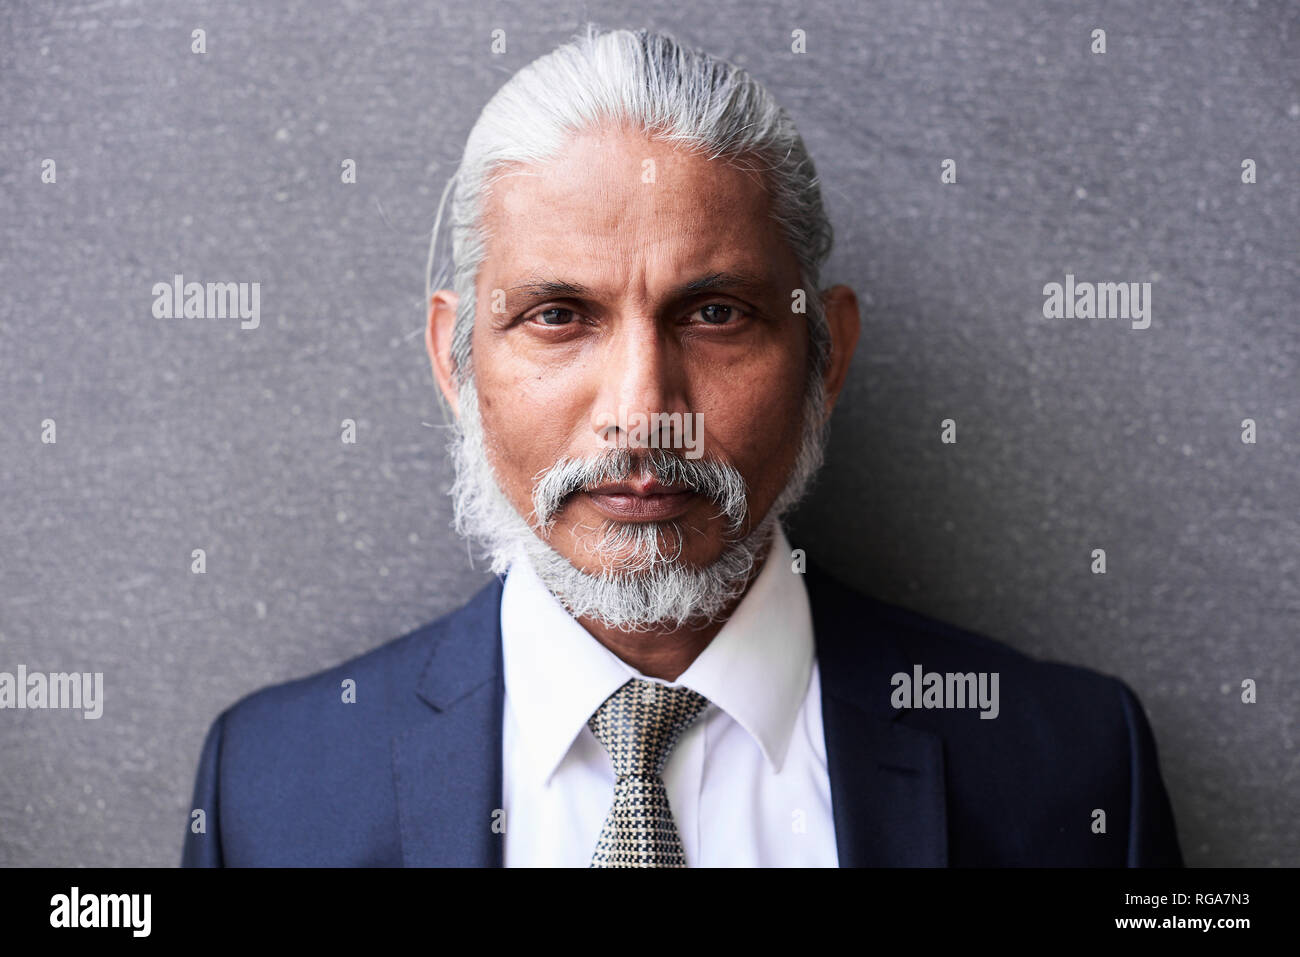 Portrait of senior businessman with grey hair and beard Stock Photo